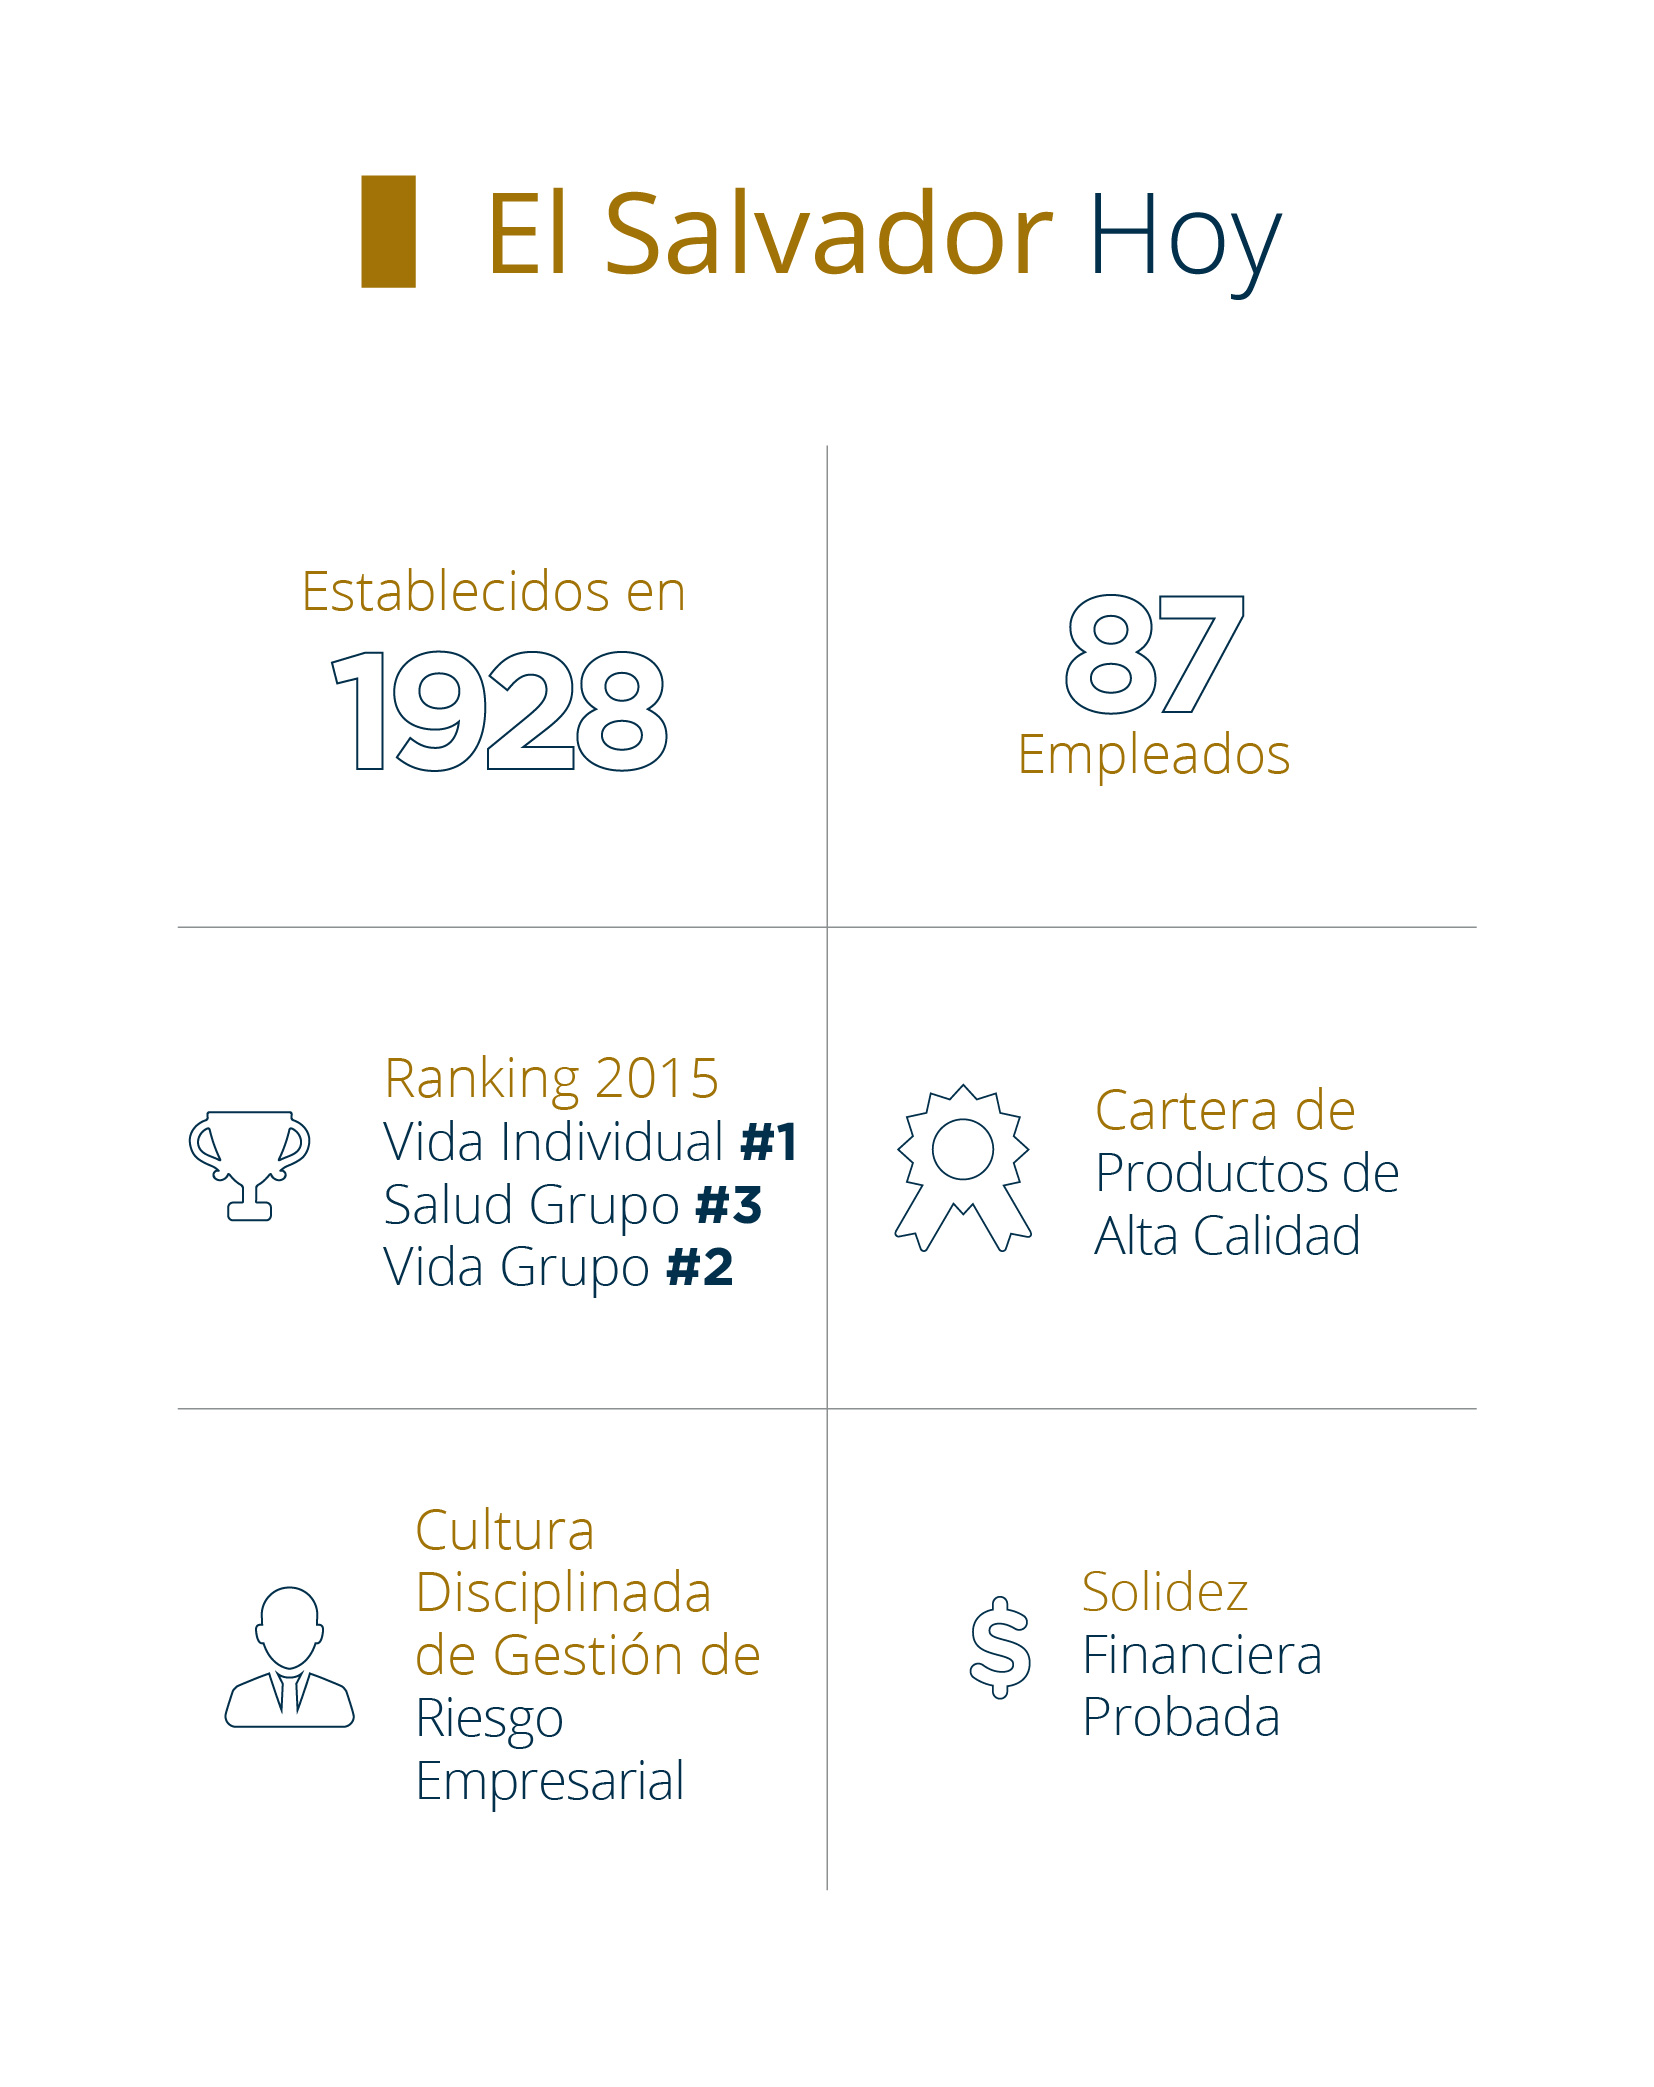 Sobre Pan-American Life Insurance Group de El Salvador 